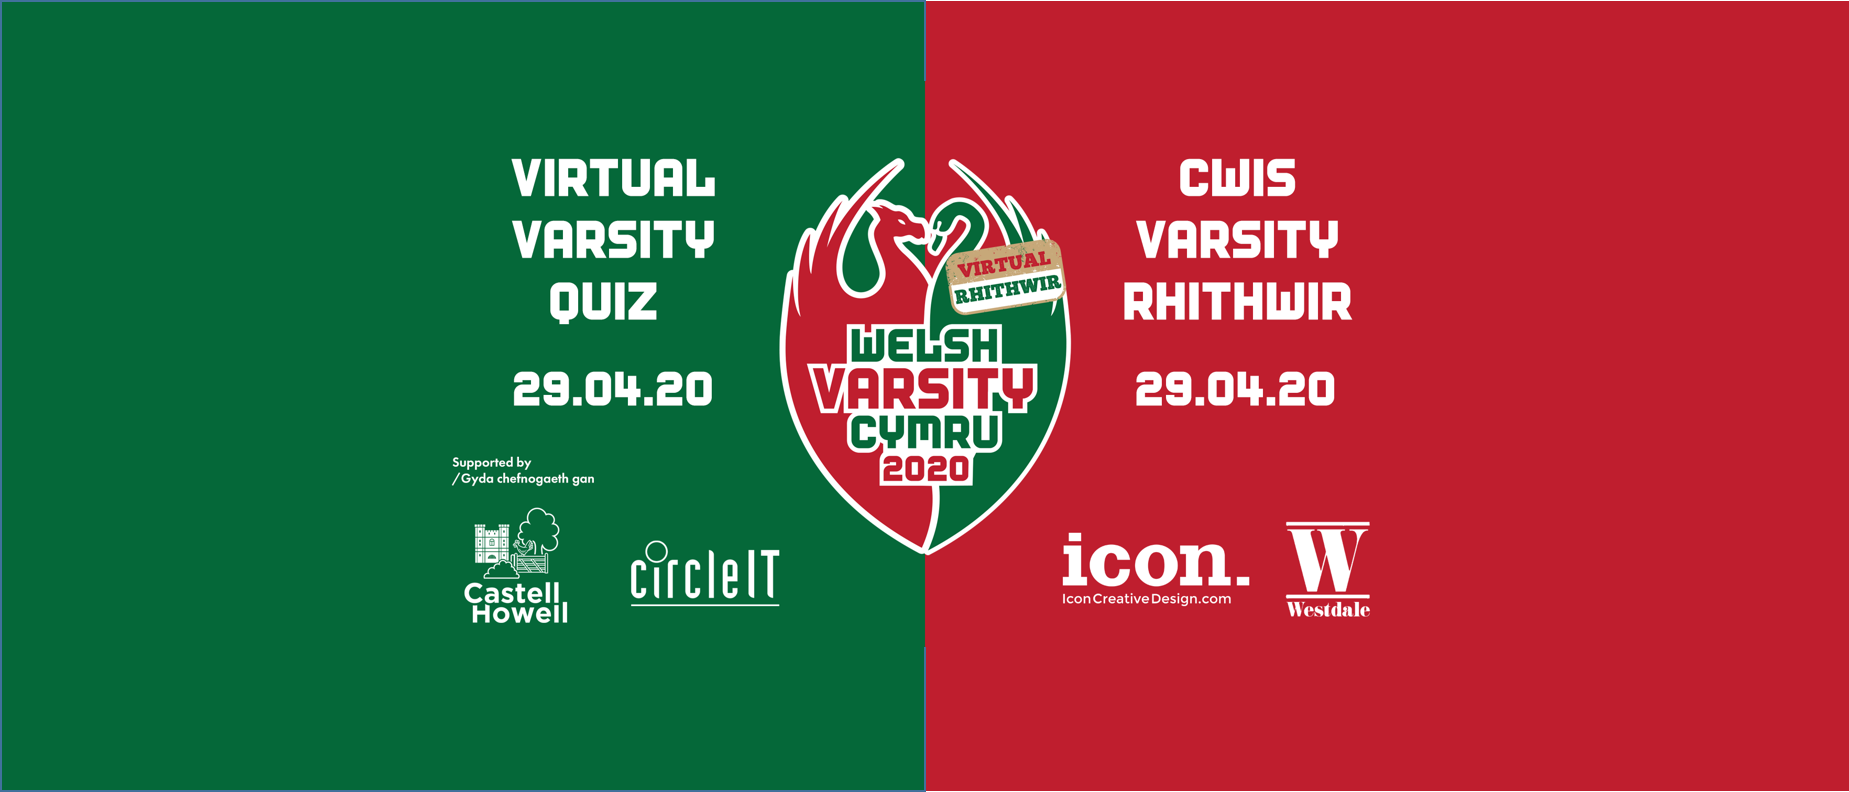 Varsity graphic - Virtual Varsity Challenge 29.04.2020